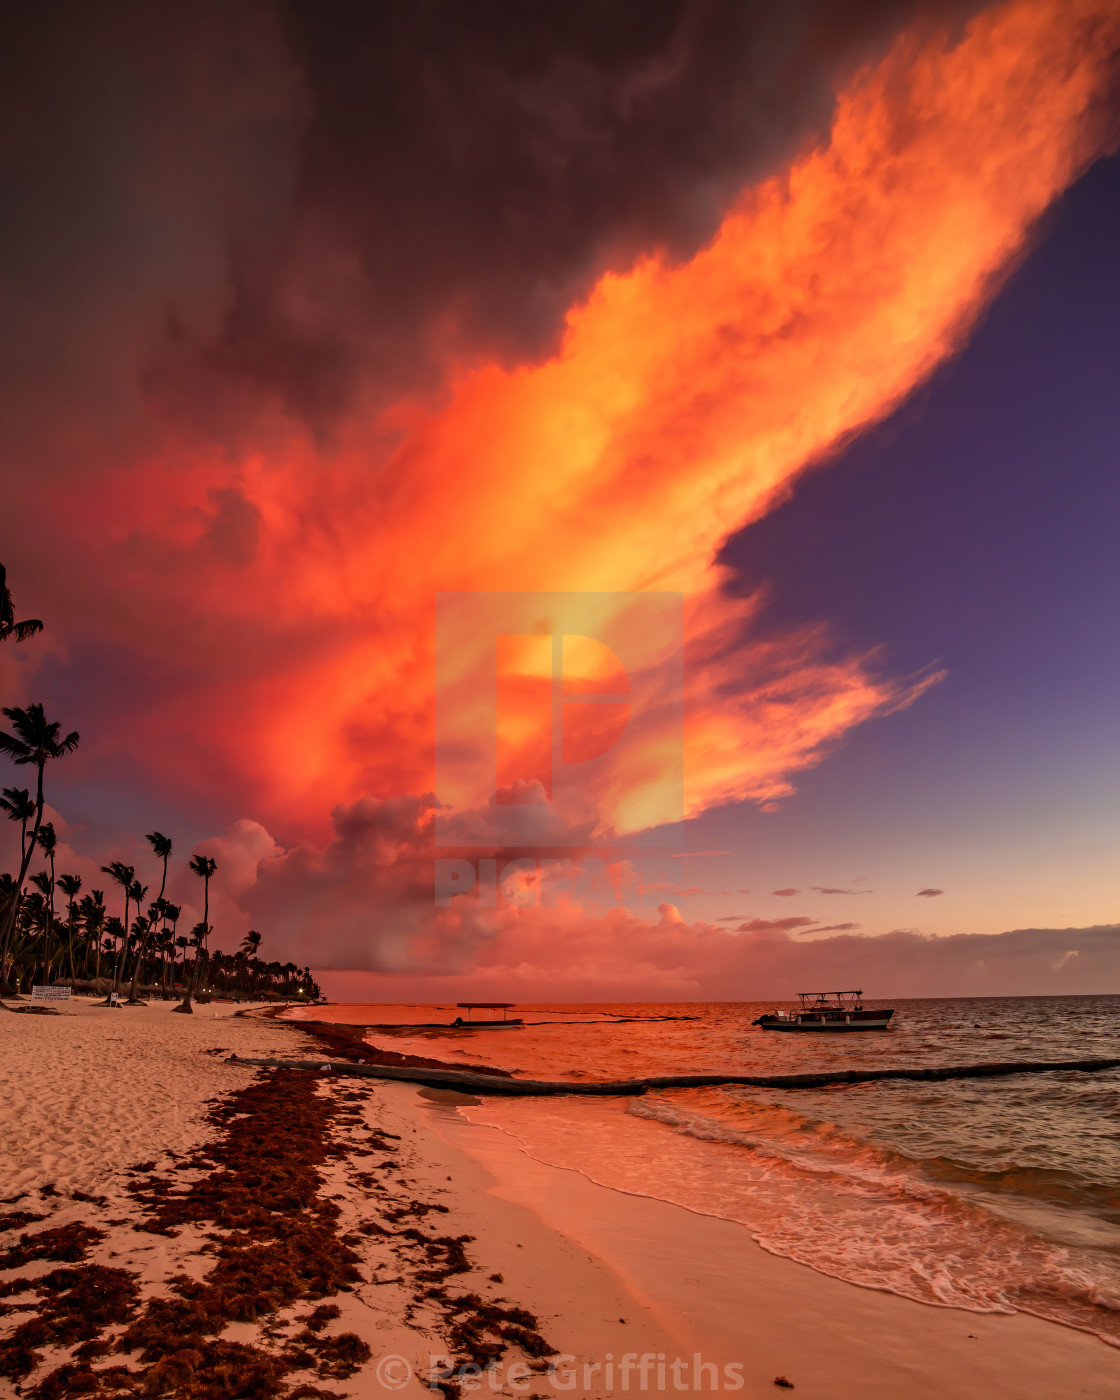 "Sunrise over the beach" stock image